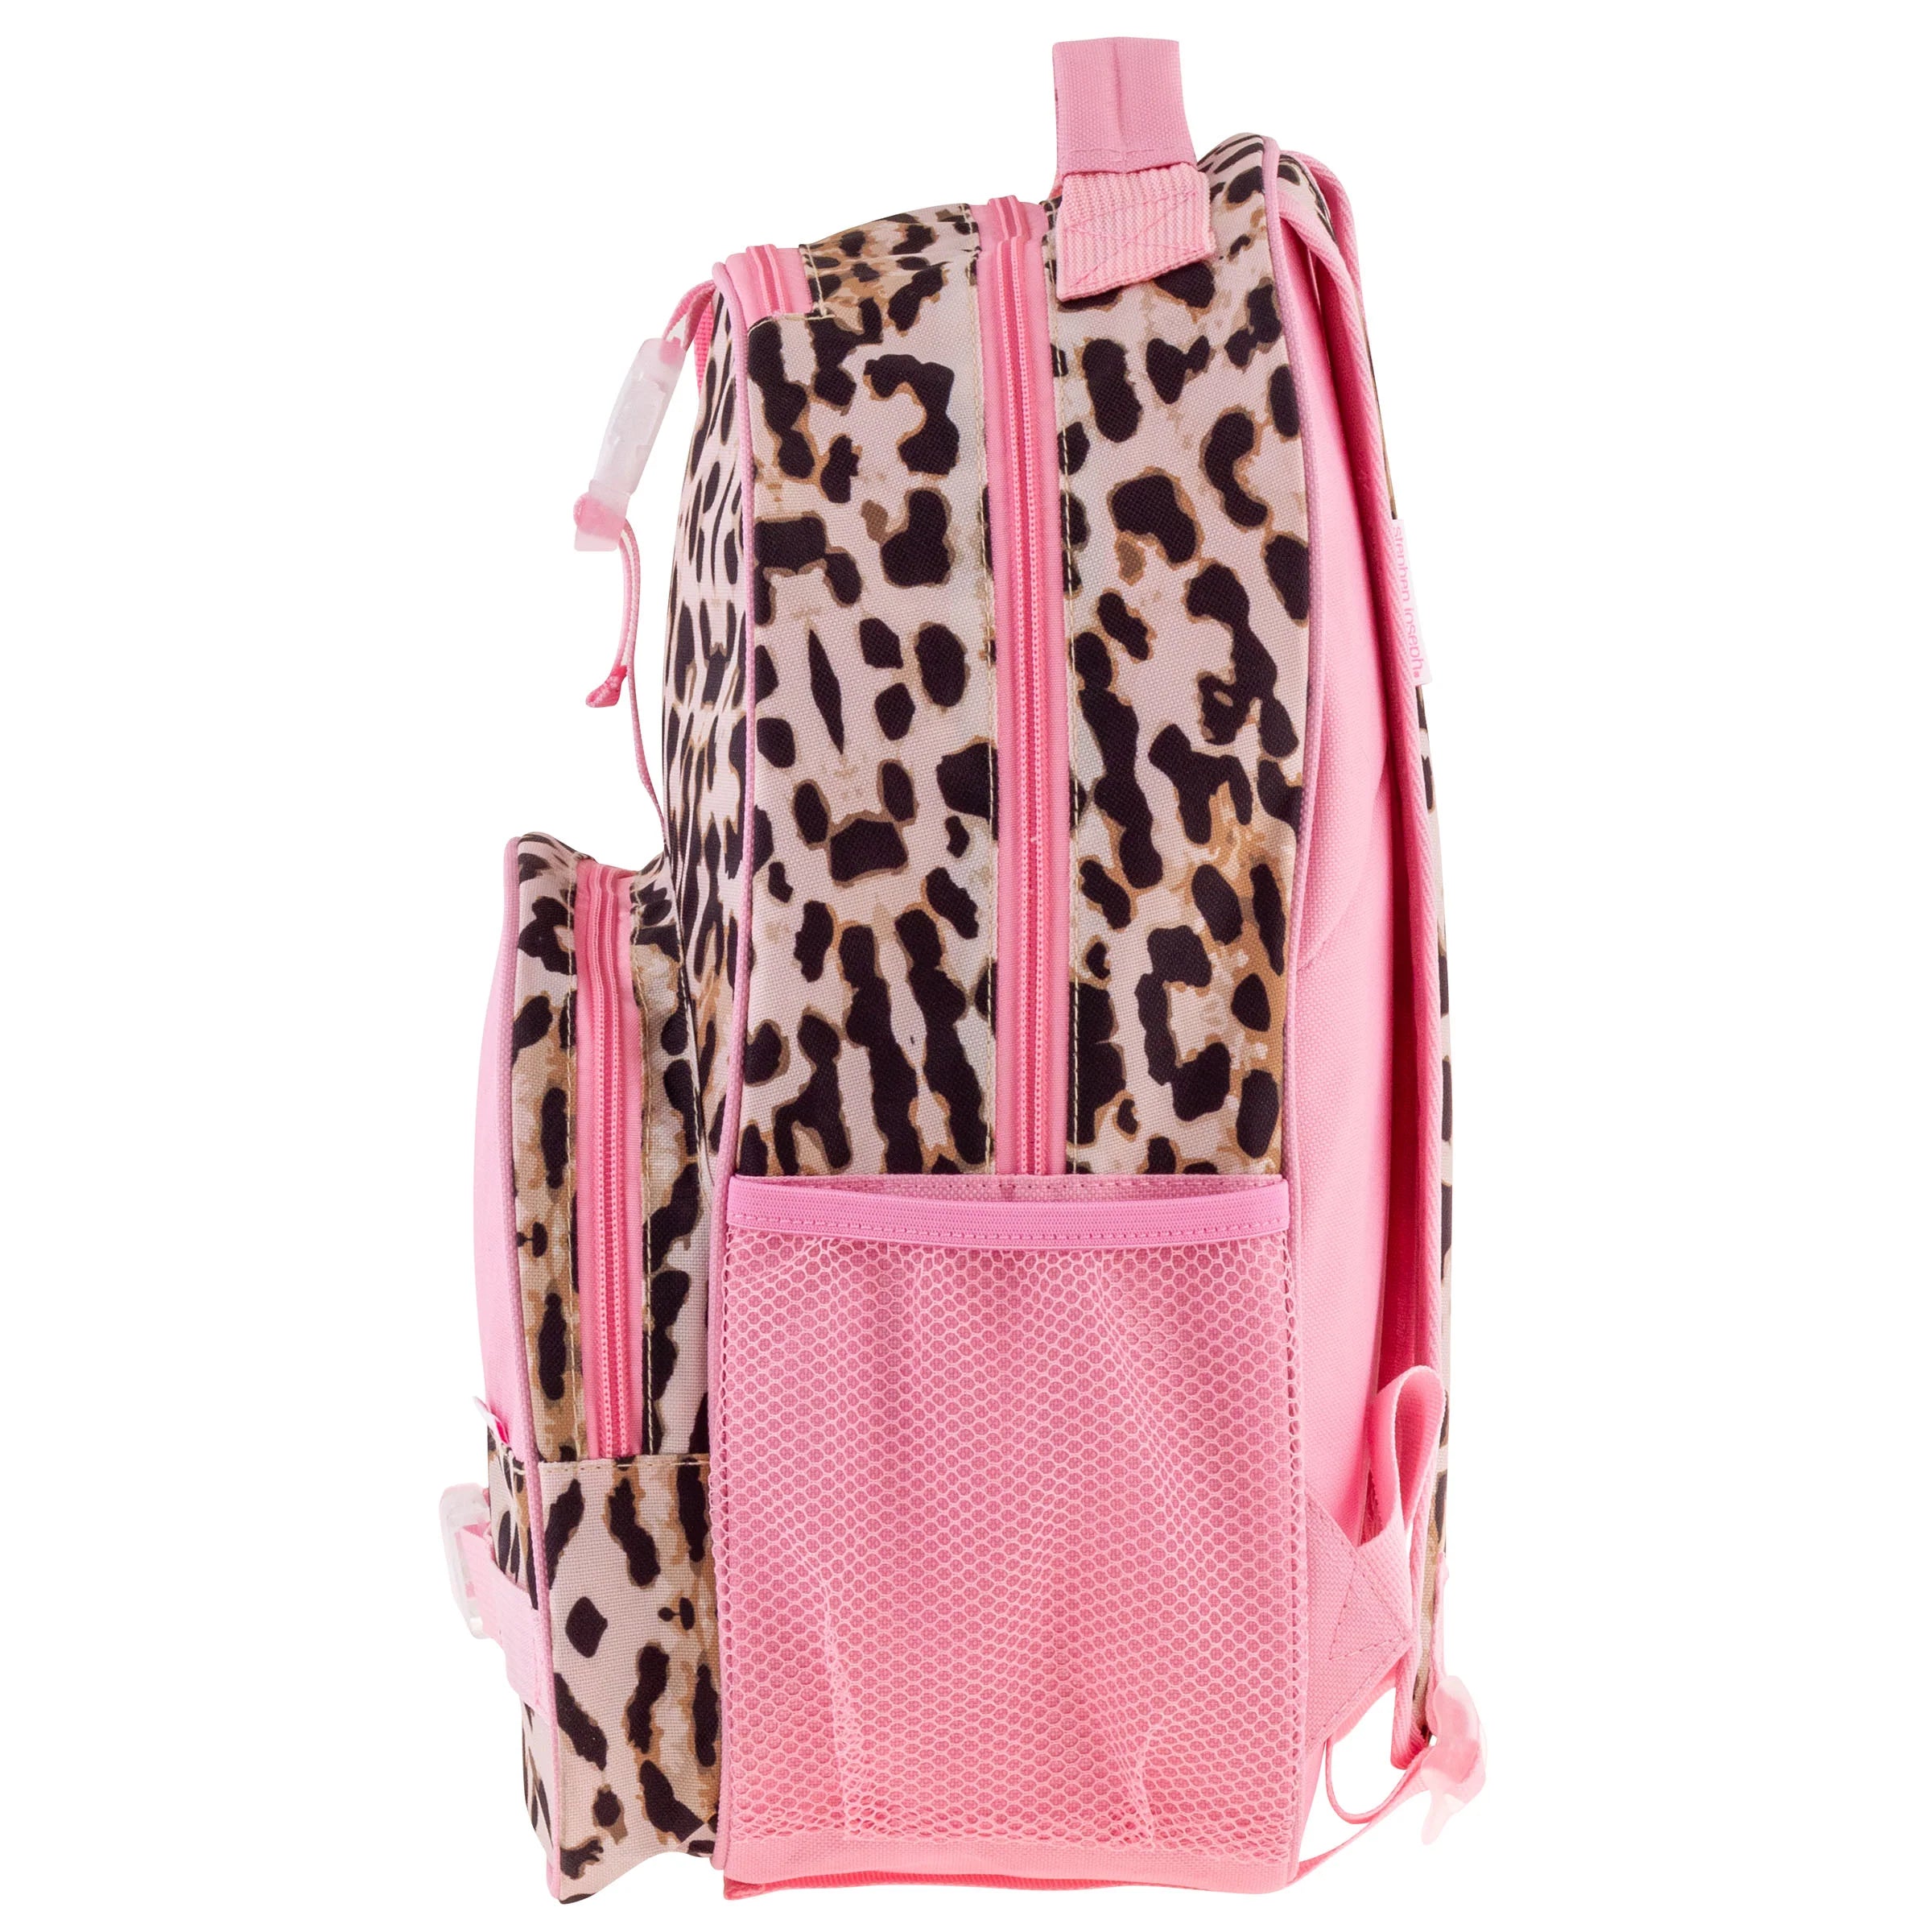 3 Pieces Black Leopard Animal Cheetah Print School Bags for Kids Girls  Fashion Backpack Adjustable Shoulder Book Bag Set with Lunch Box Pencil  Case - Walmart.com